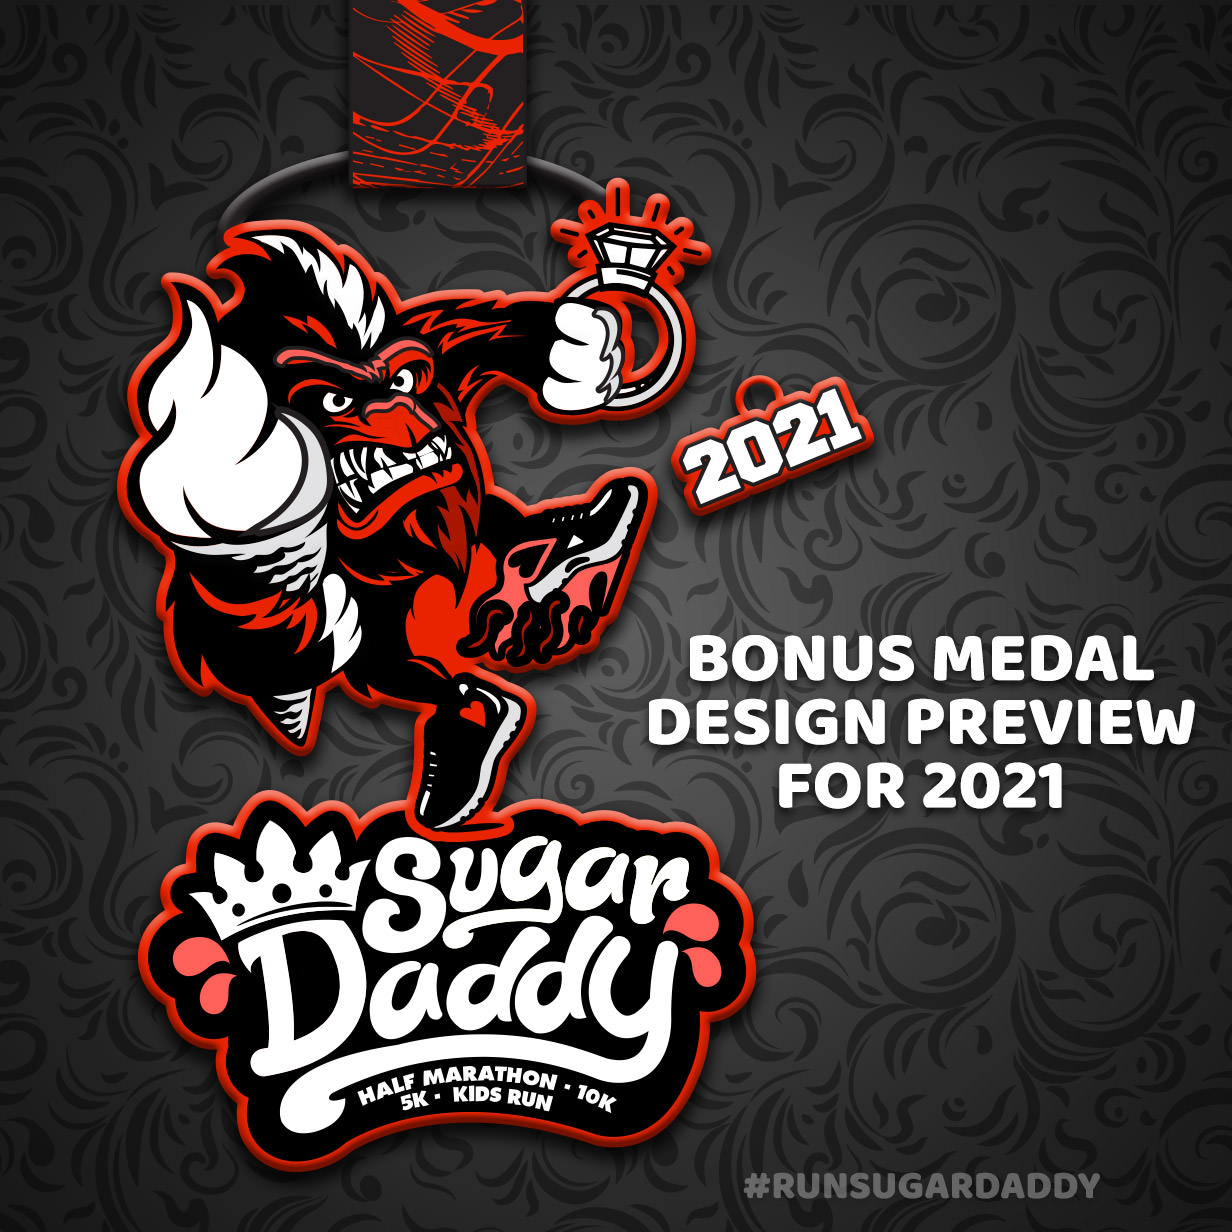 2021 Bonus Medal